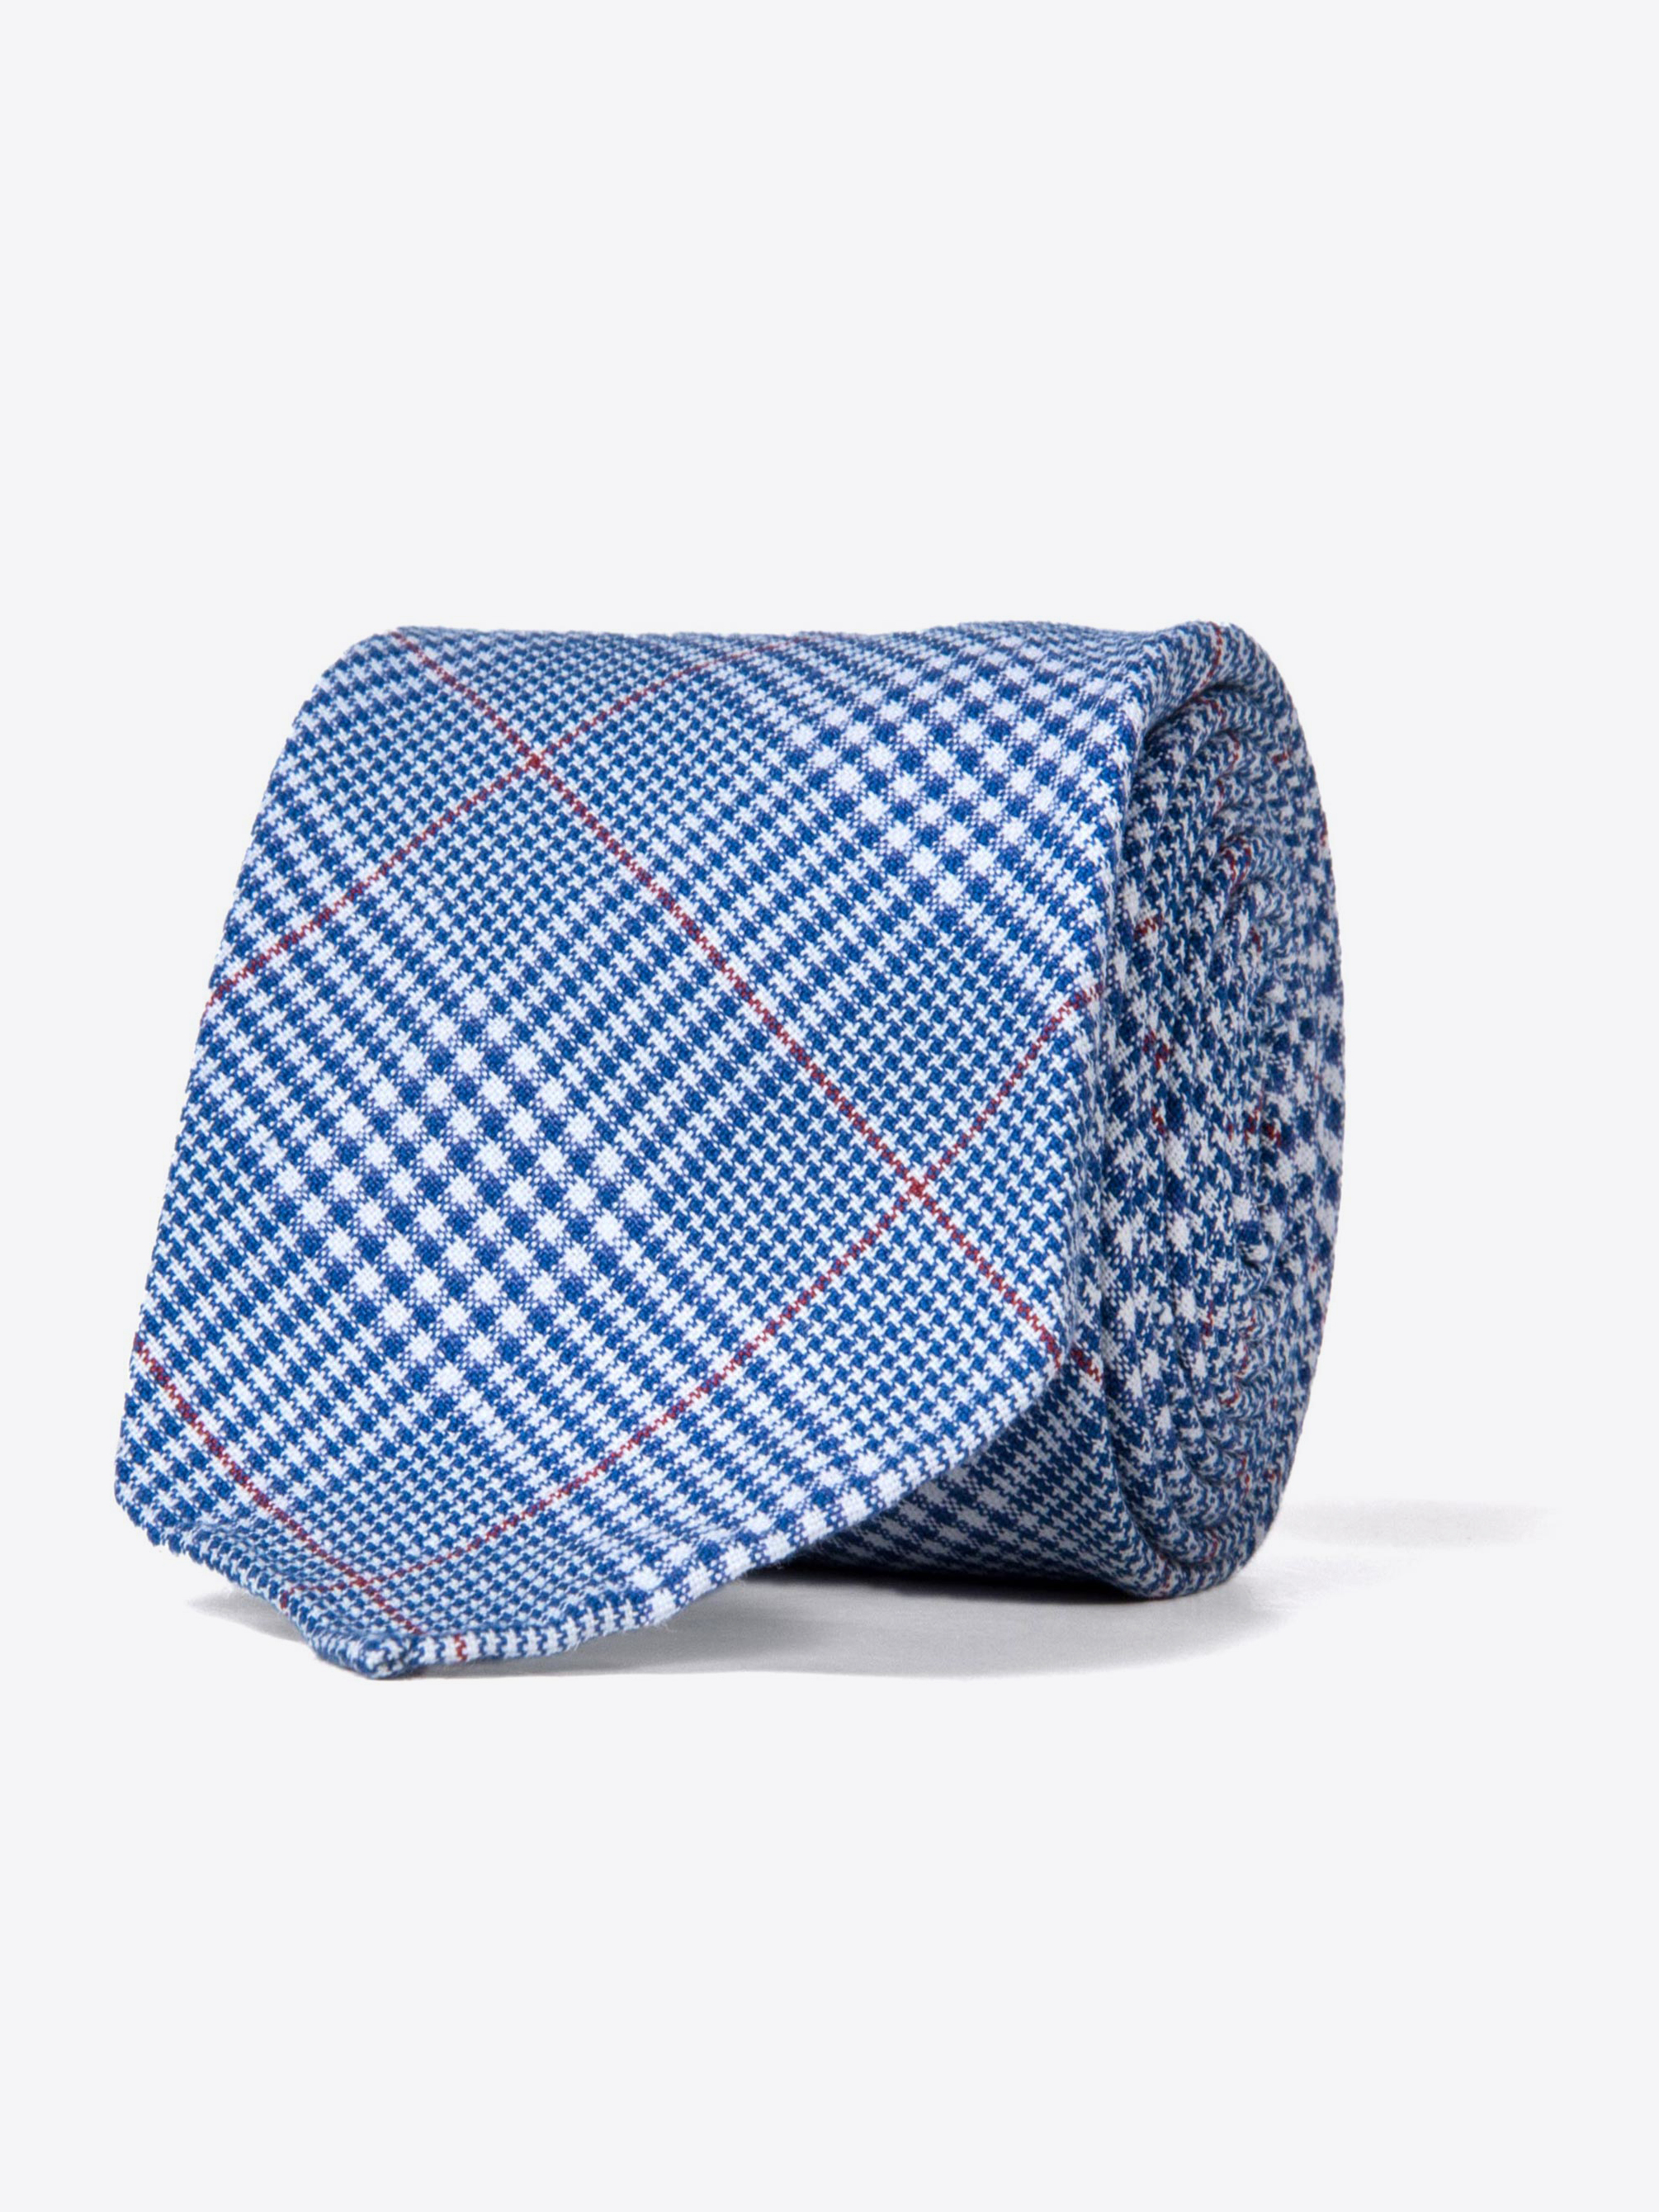 Zoom Image of Sorrento Blue Linen Glen Plaid Tie